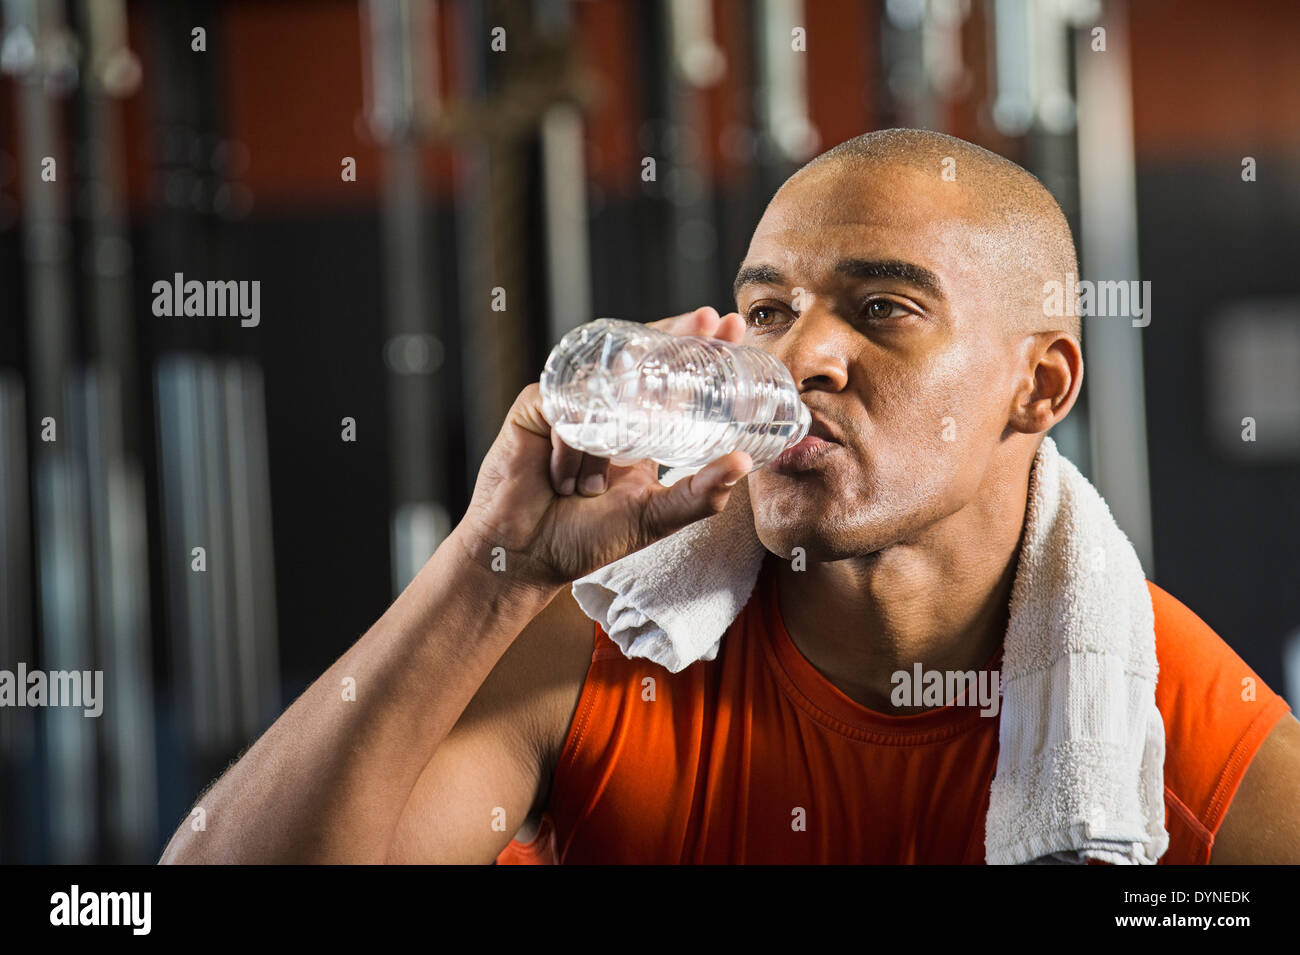 https://c8.alamy.com/comp/DYNEDK/black-man-drinking-water-in-gym-DYNEDK.jpg